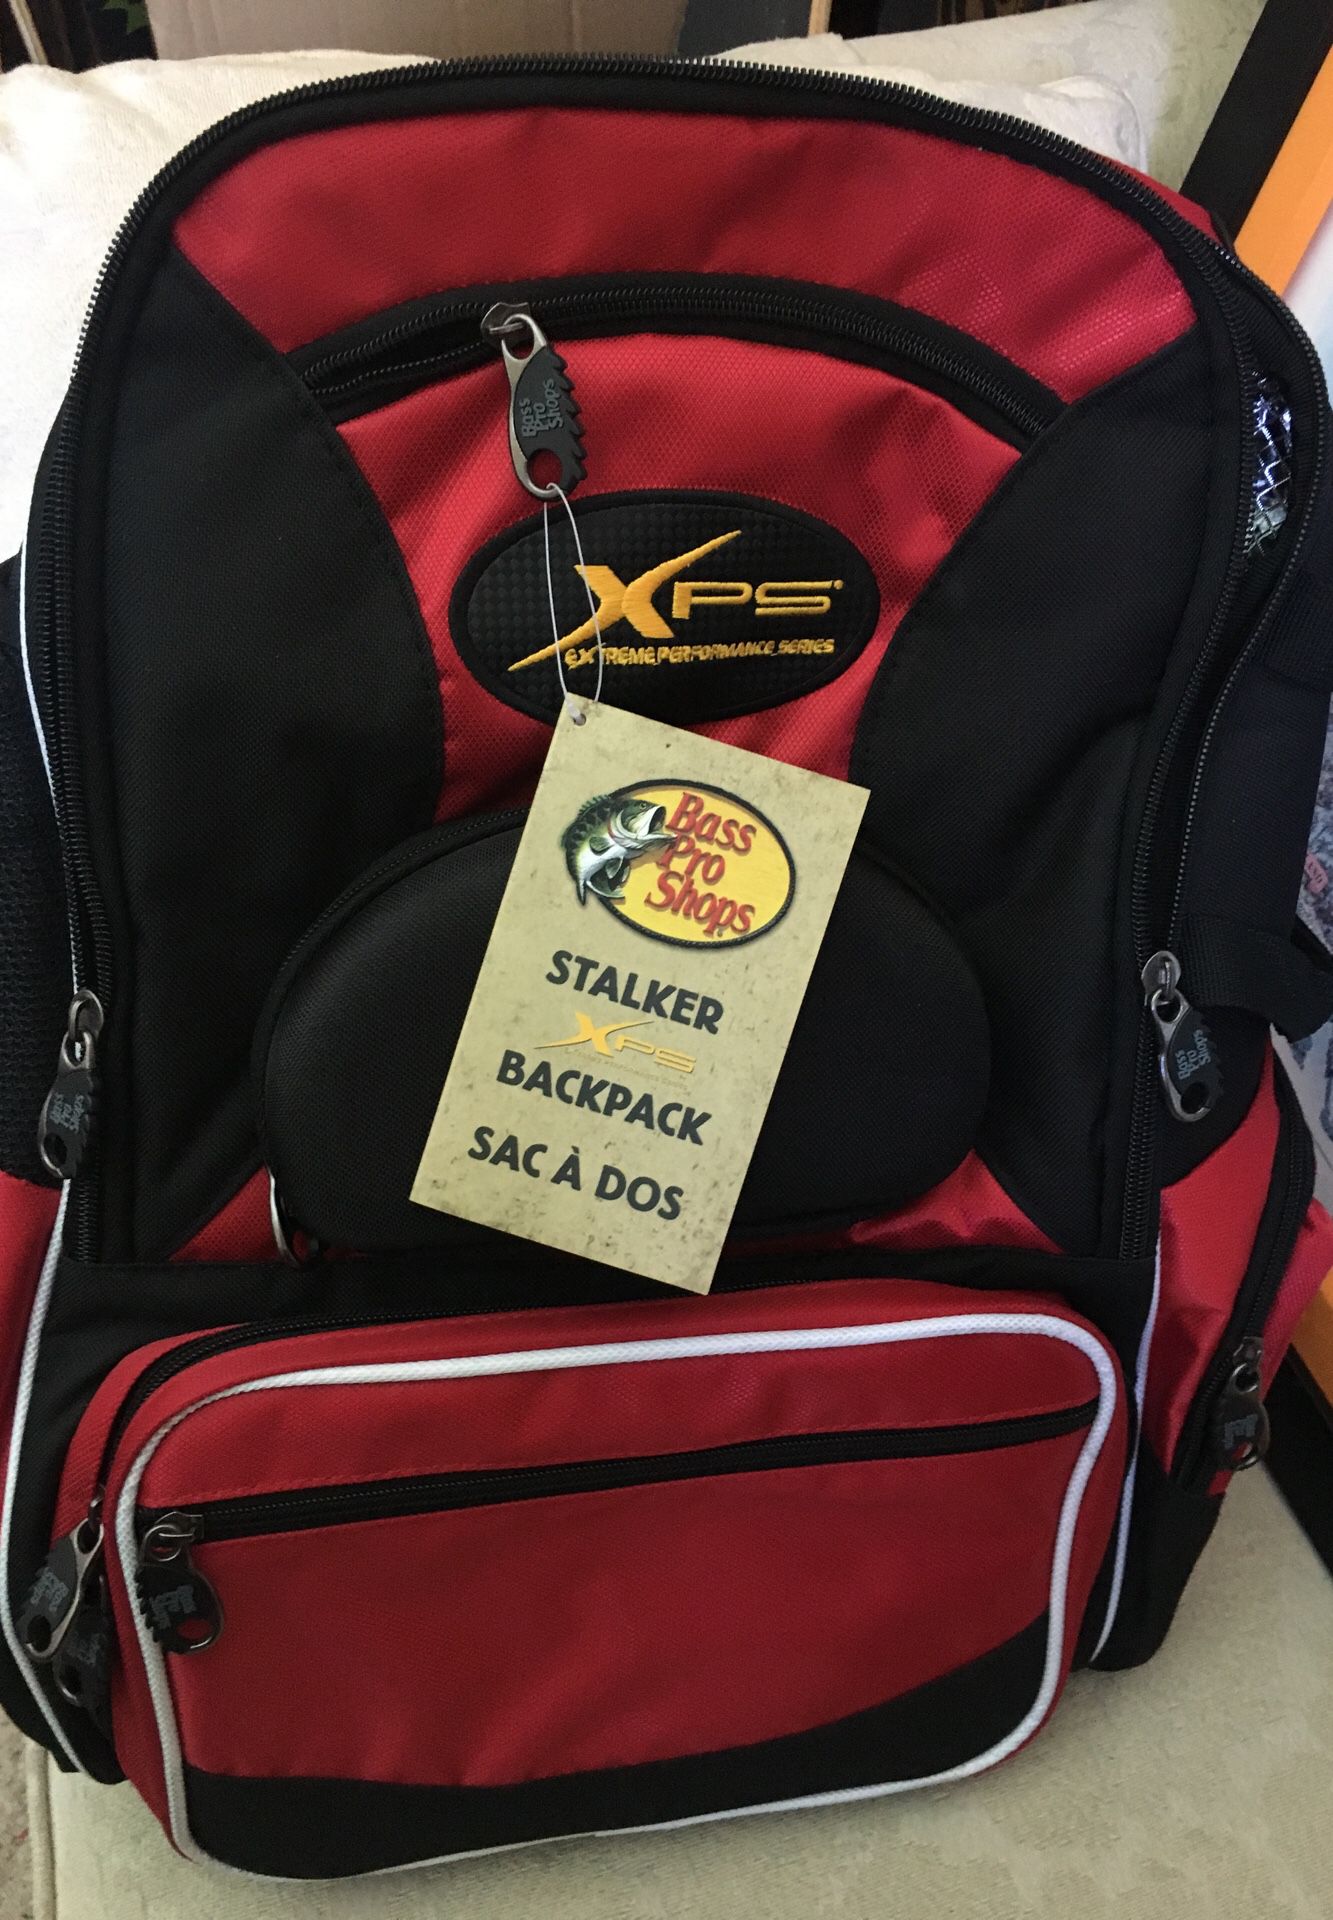 Bass Pro Shops Stalker Backpack Tackle System- XPS Extreme Performance  Series